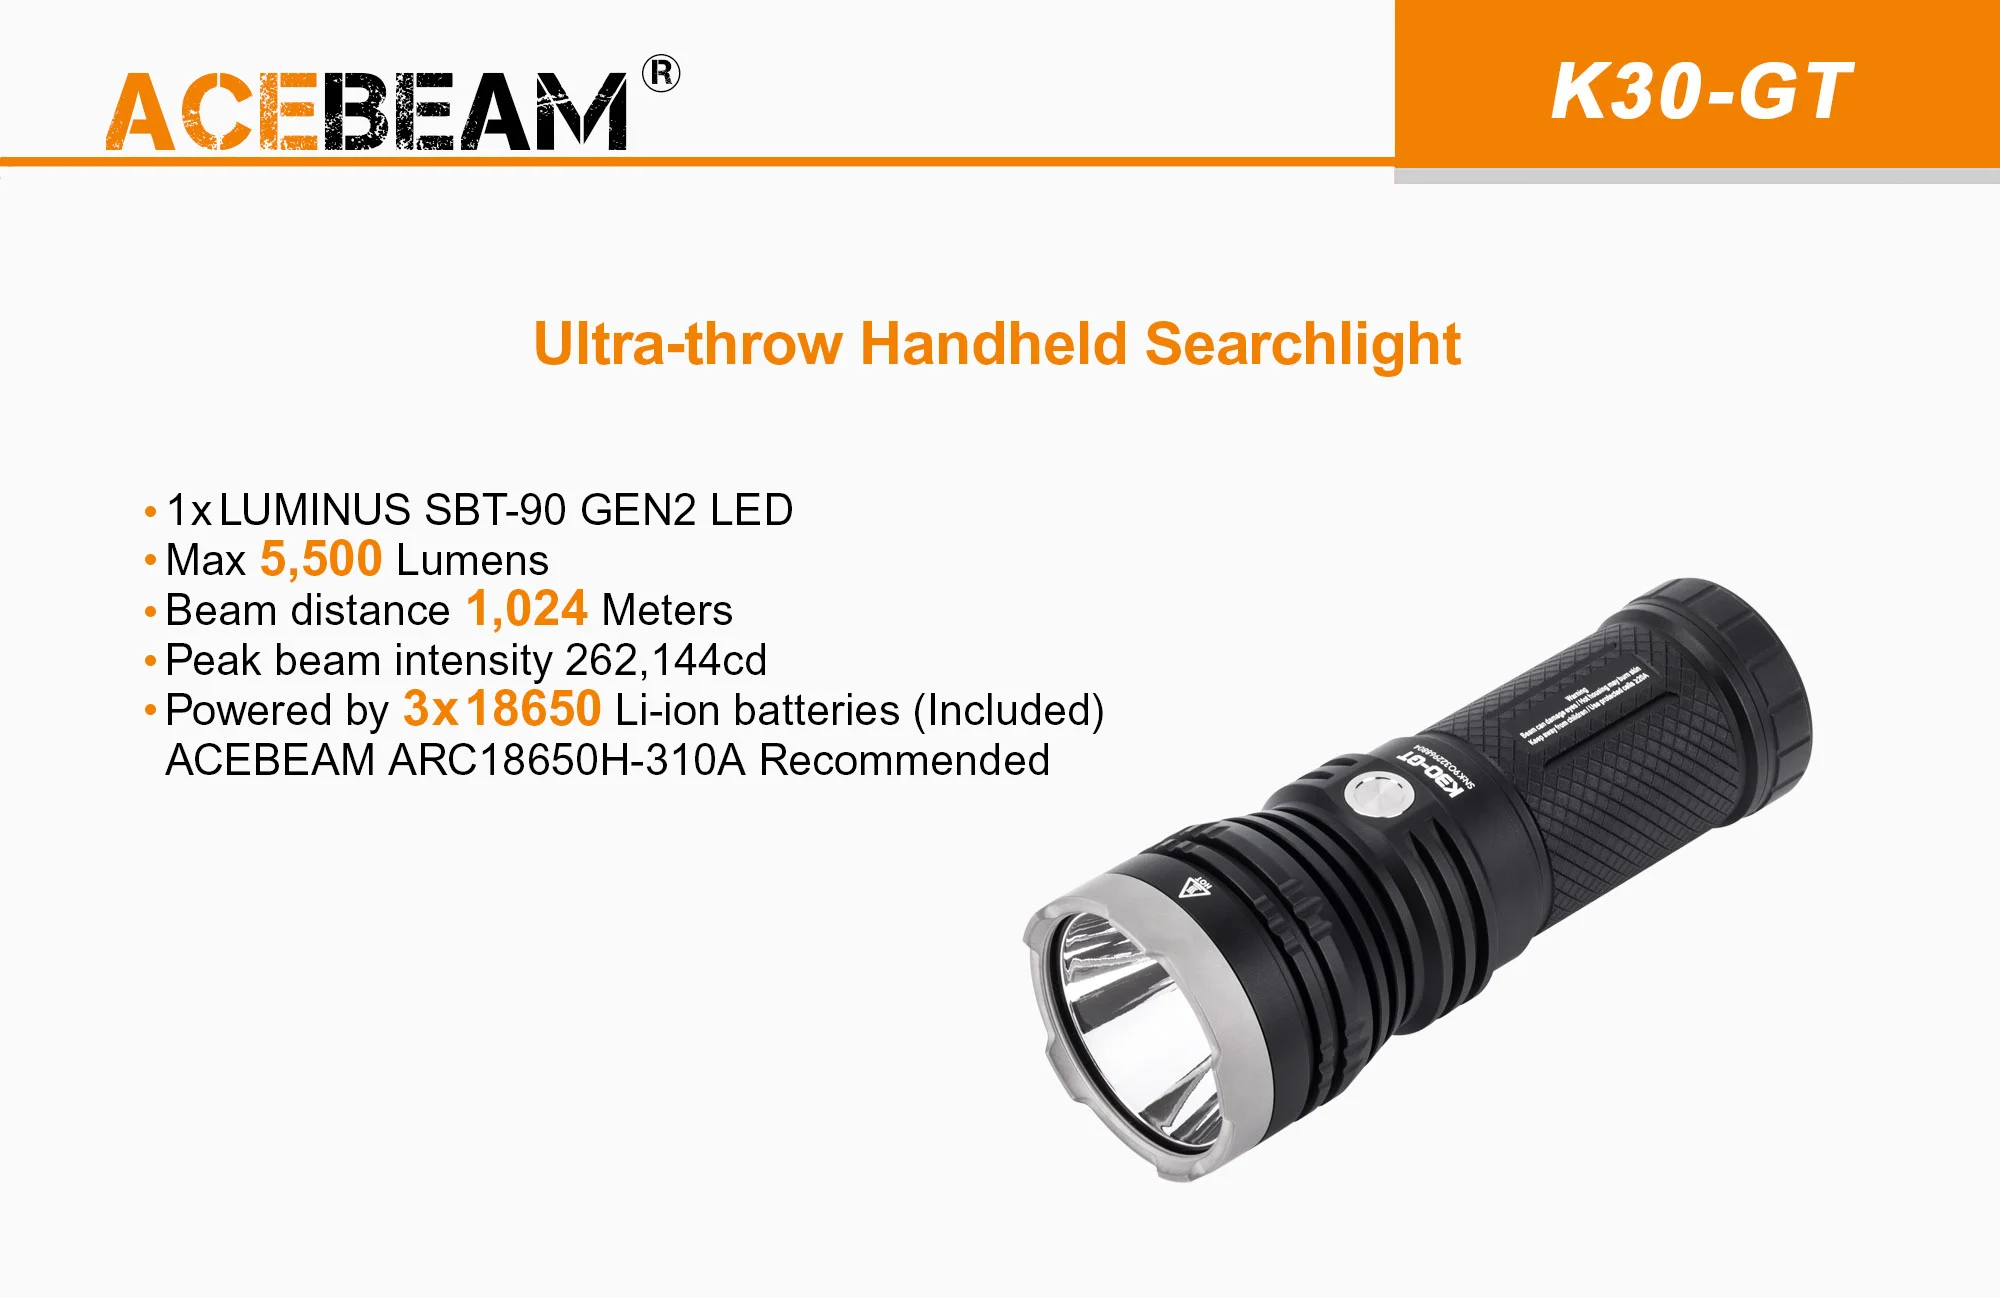 Acebaem K30GT 1 x LUMINUS SBT-90-GEN2 LED 5500 Lumens Far-Throwing Searchlight